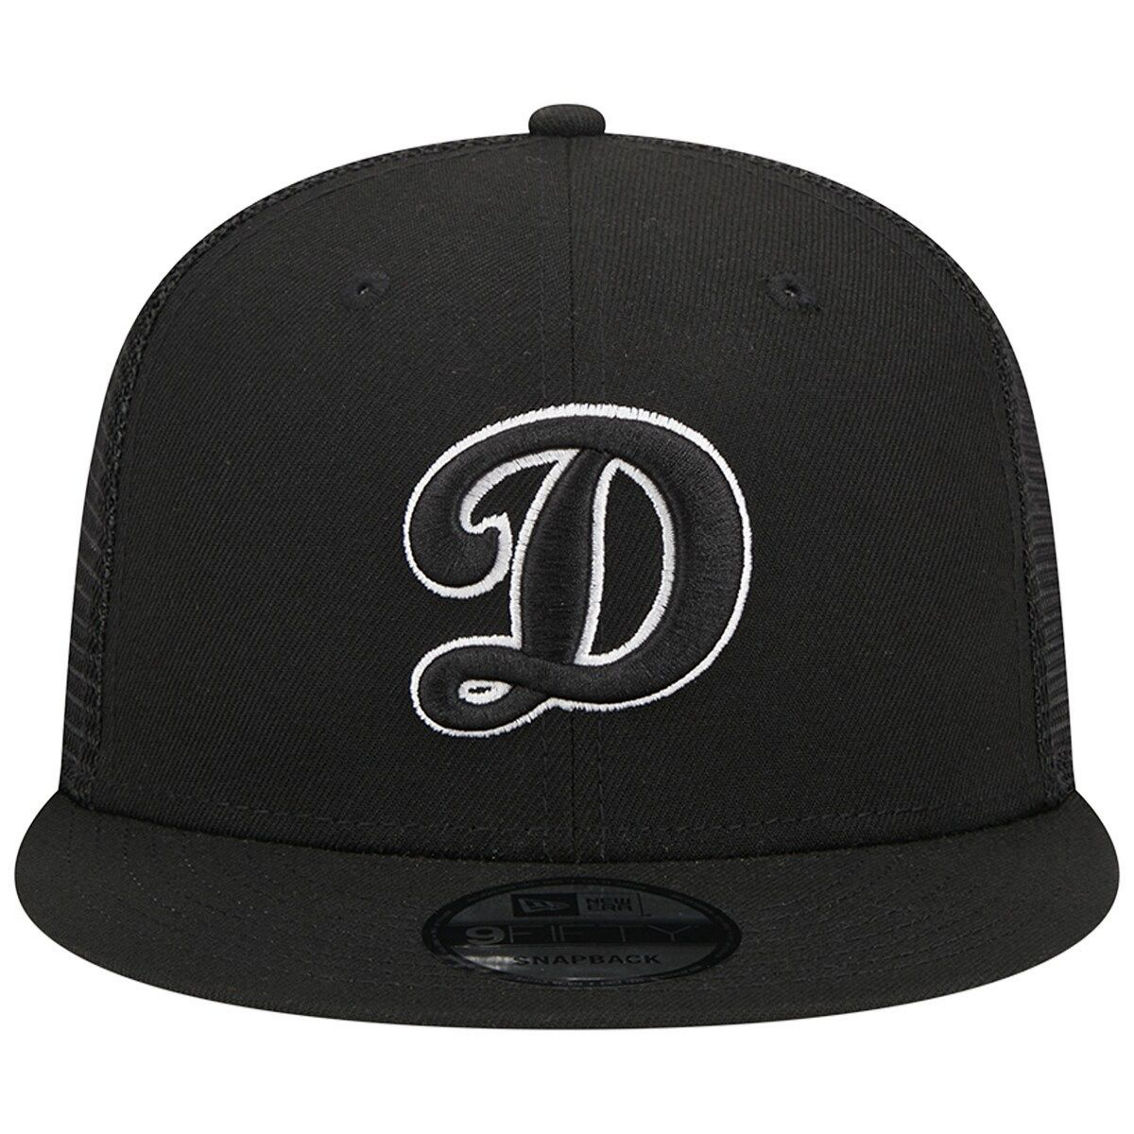 New Era Men's Black Los Angeles Dodgers Letter Trucker 9FIFTY Snapback Hat - Image 3 of 4